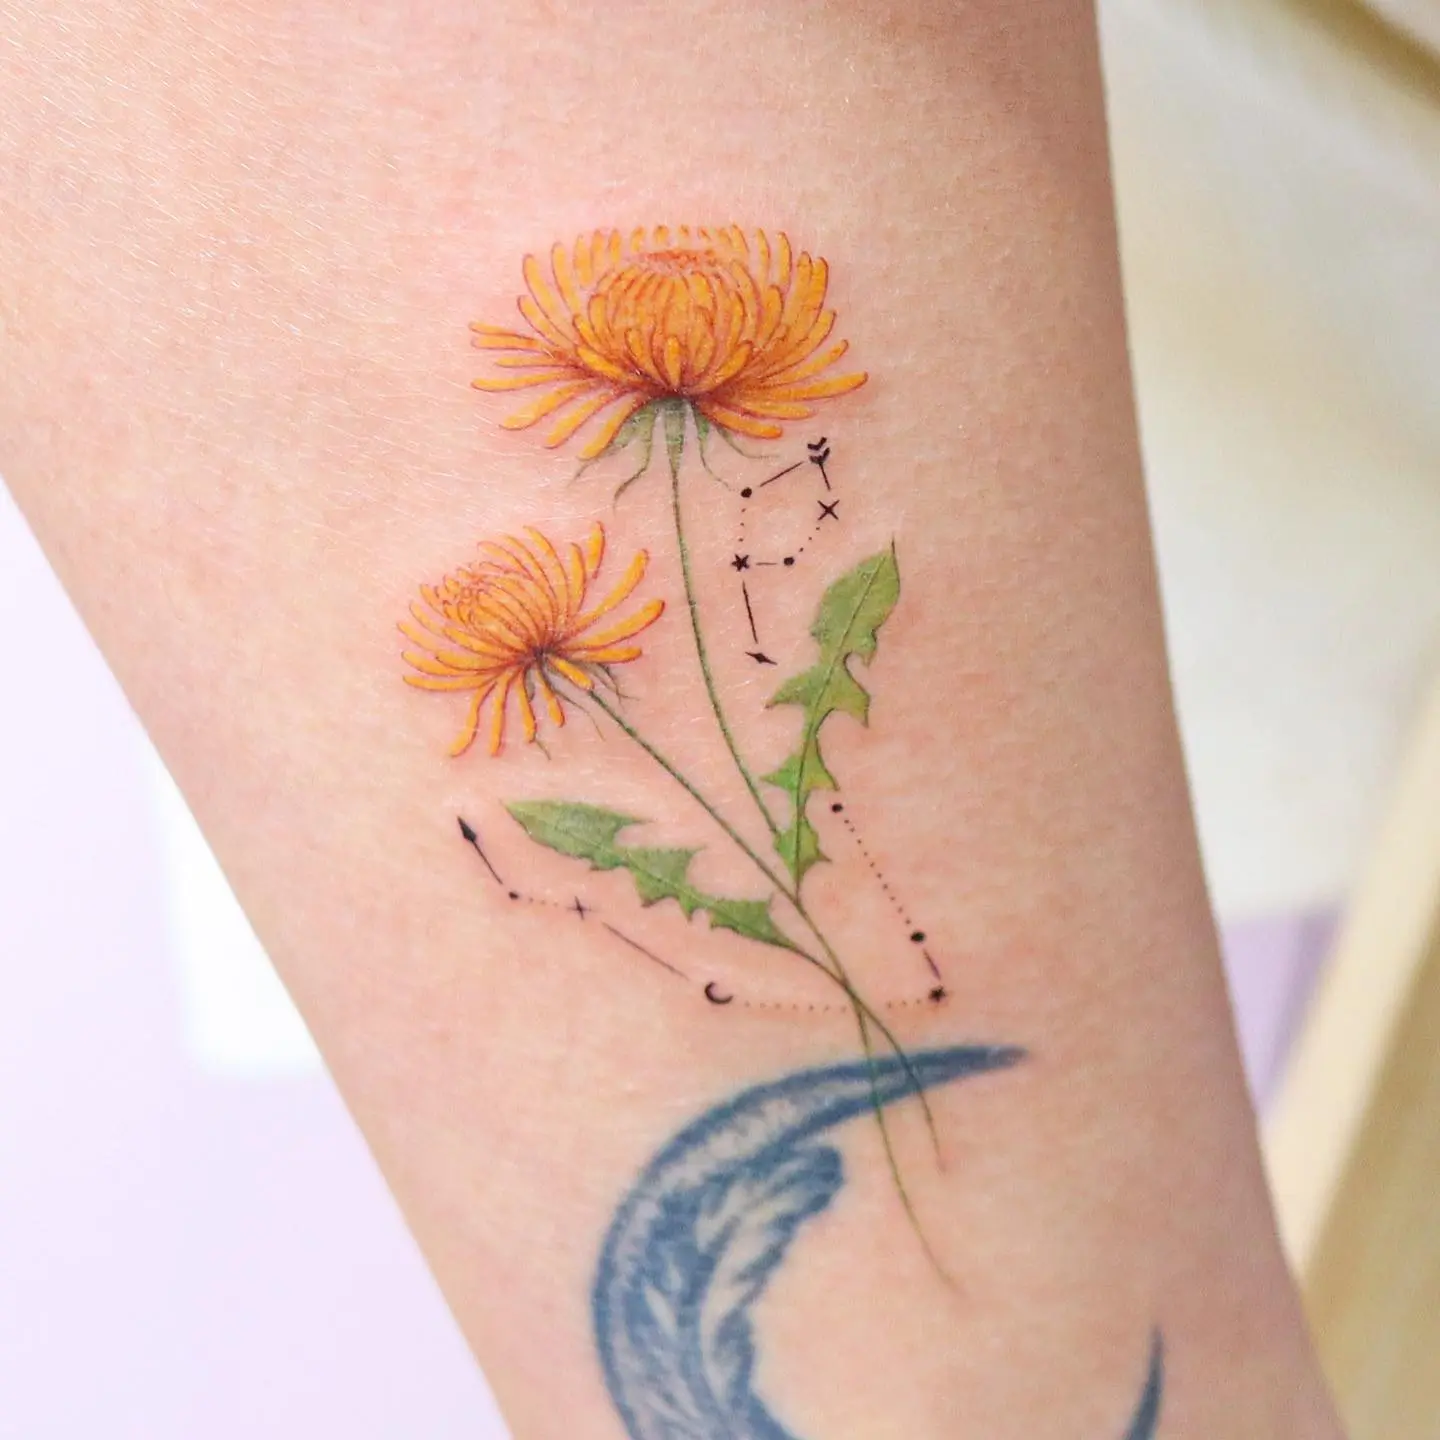 Small Tattoos on Twitter Coloured dandelion tattoo on the right shoulder  blade Tattoo artist Mini Lau smalltatto httpstcotPKE7S7VsY  httpstcozjbnpgIaWL  Twitter